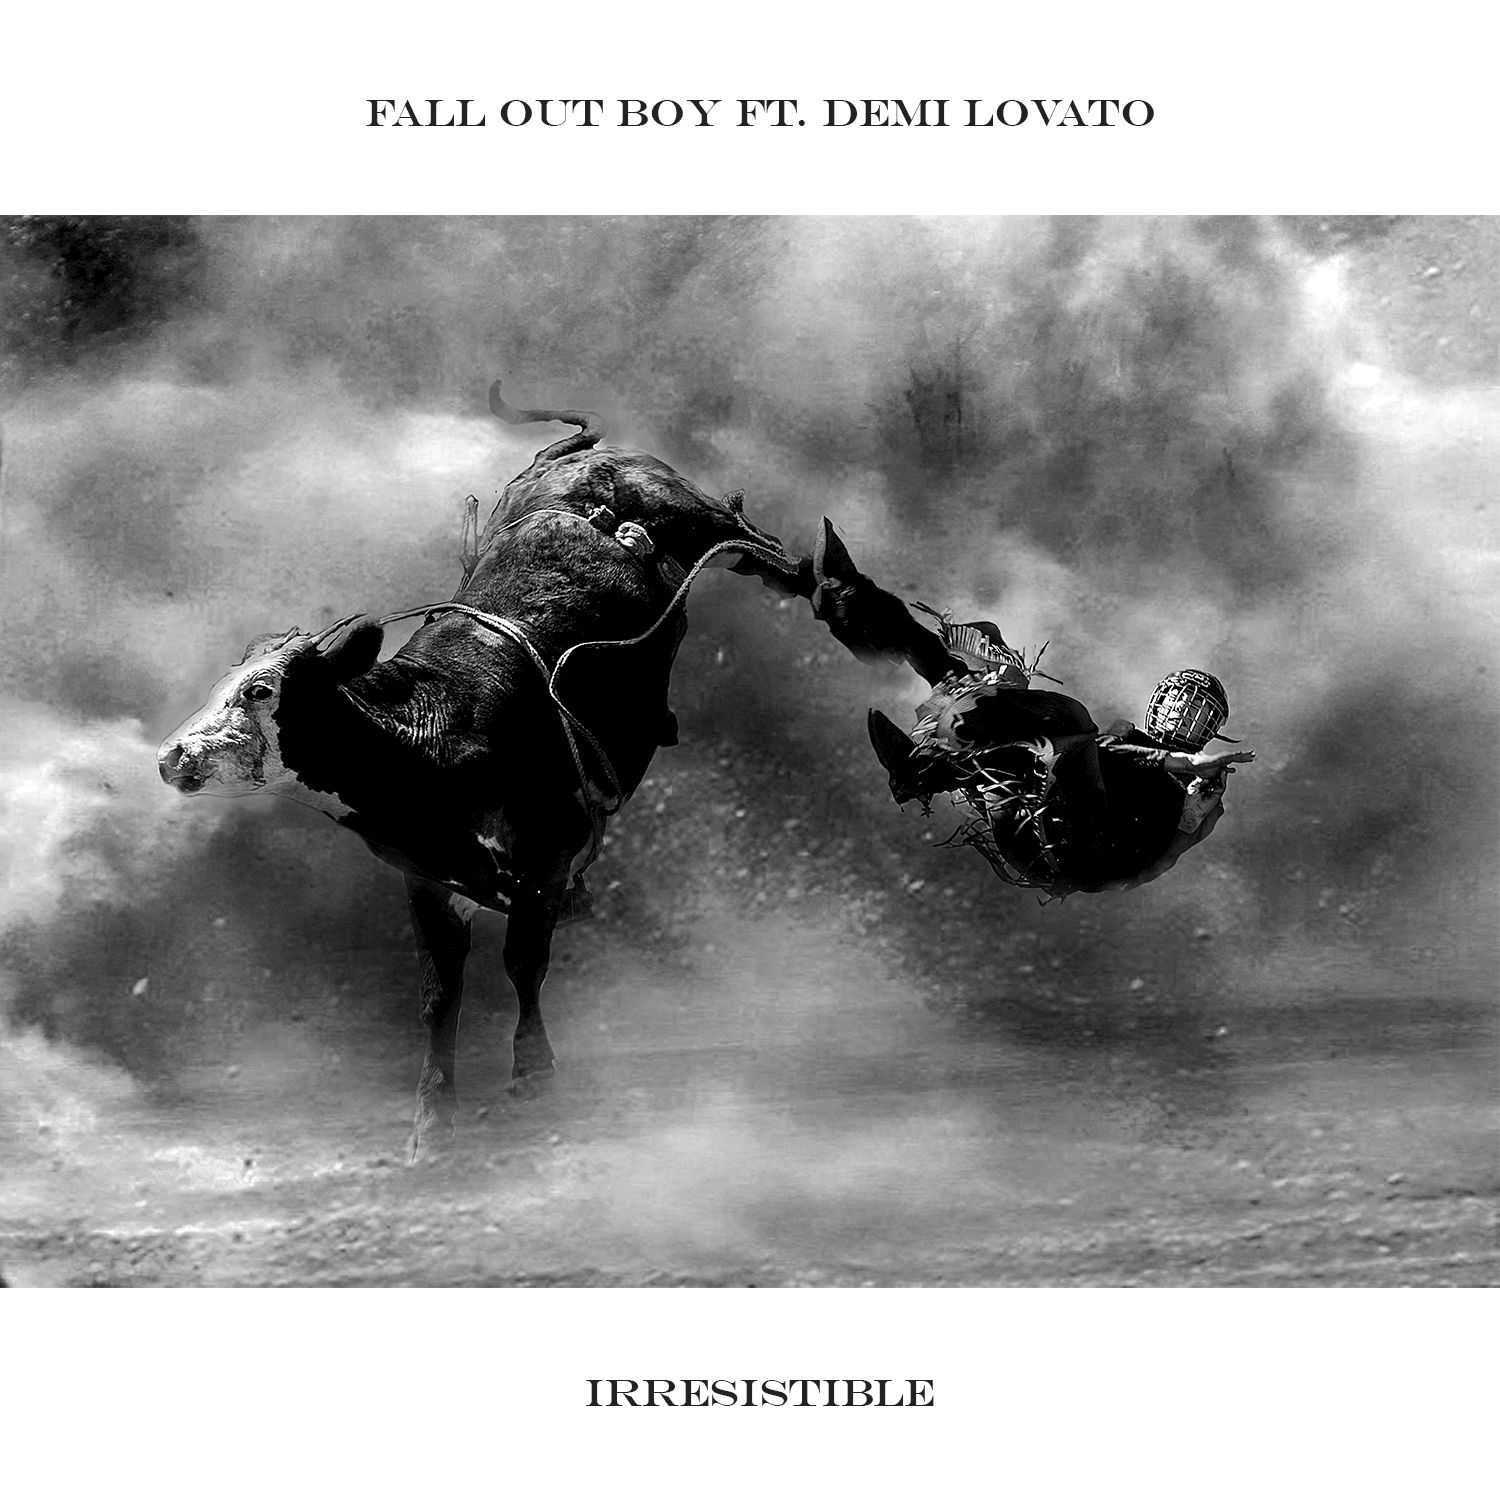 Fall Out Boy - Irresistible (2015) Album Info